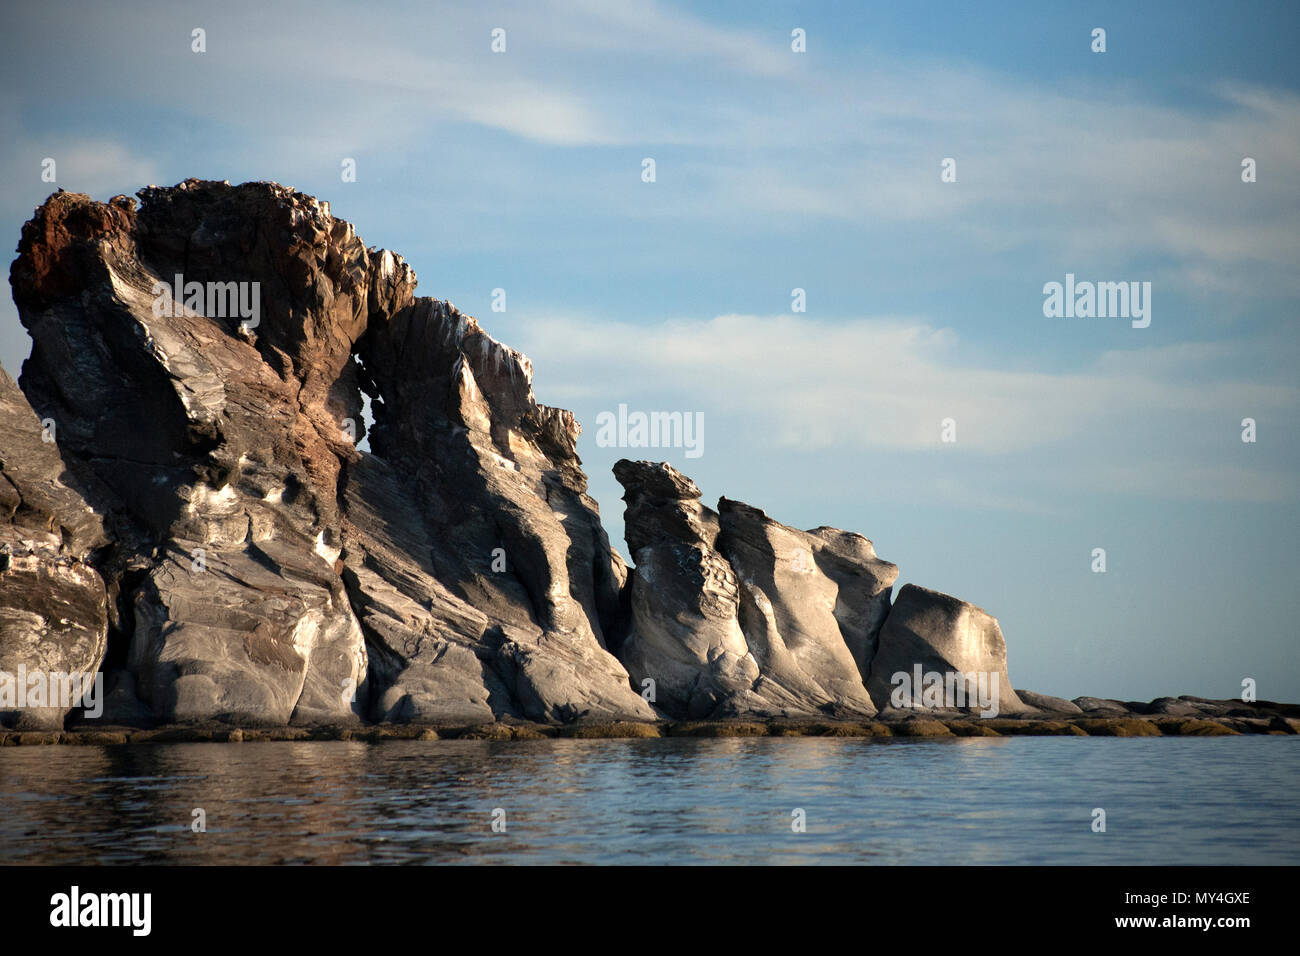 Rock formations in Cononado Island in Loreto Bay in Mexico's southern Baja California state, February 14, 2009. Stock Photo